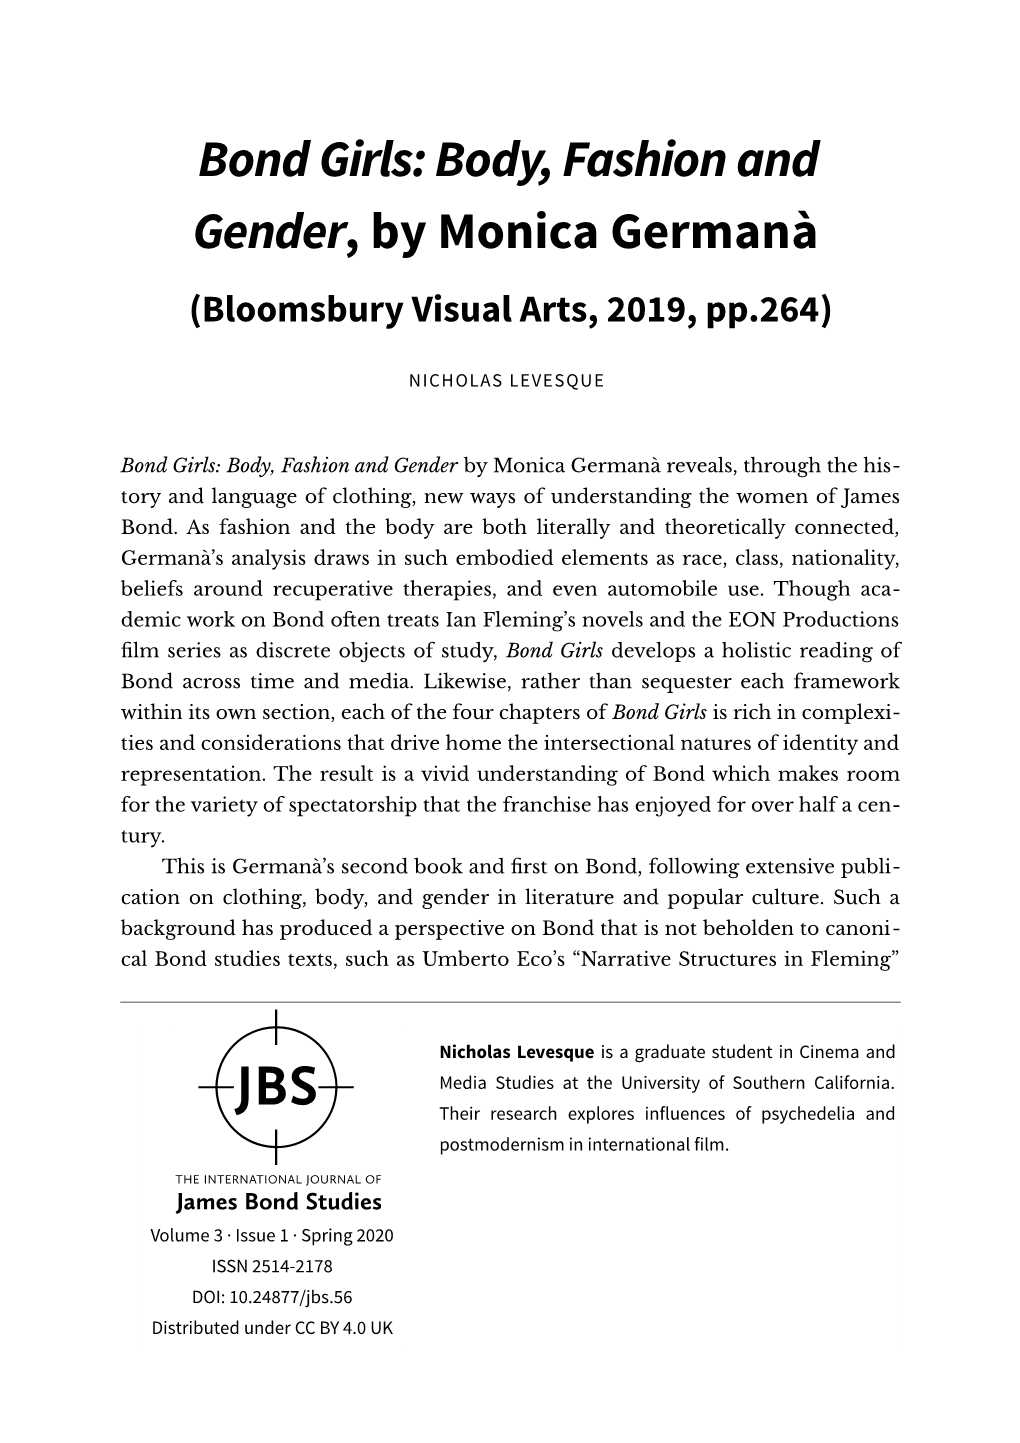 Bond Girls: Body, Fashion and Gender, by Monica Germanà (Bloomsbury Visual Arts, 2019, Pp.264)